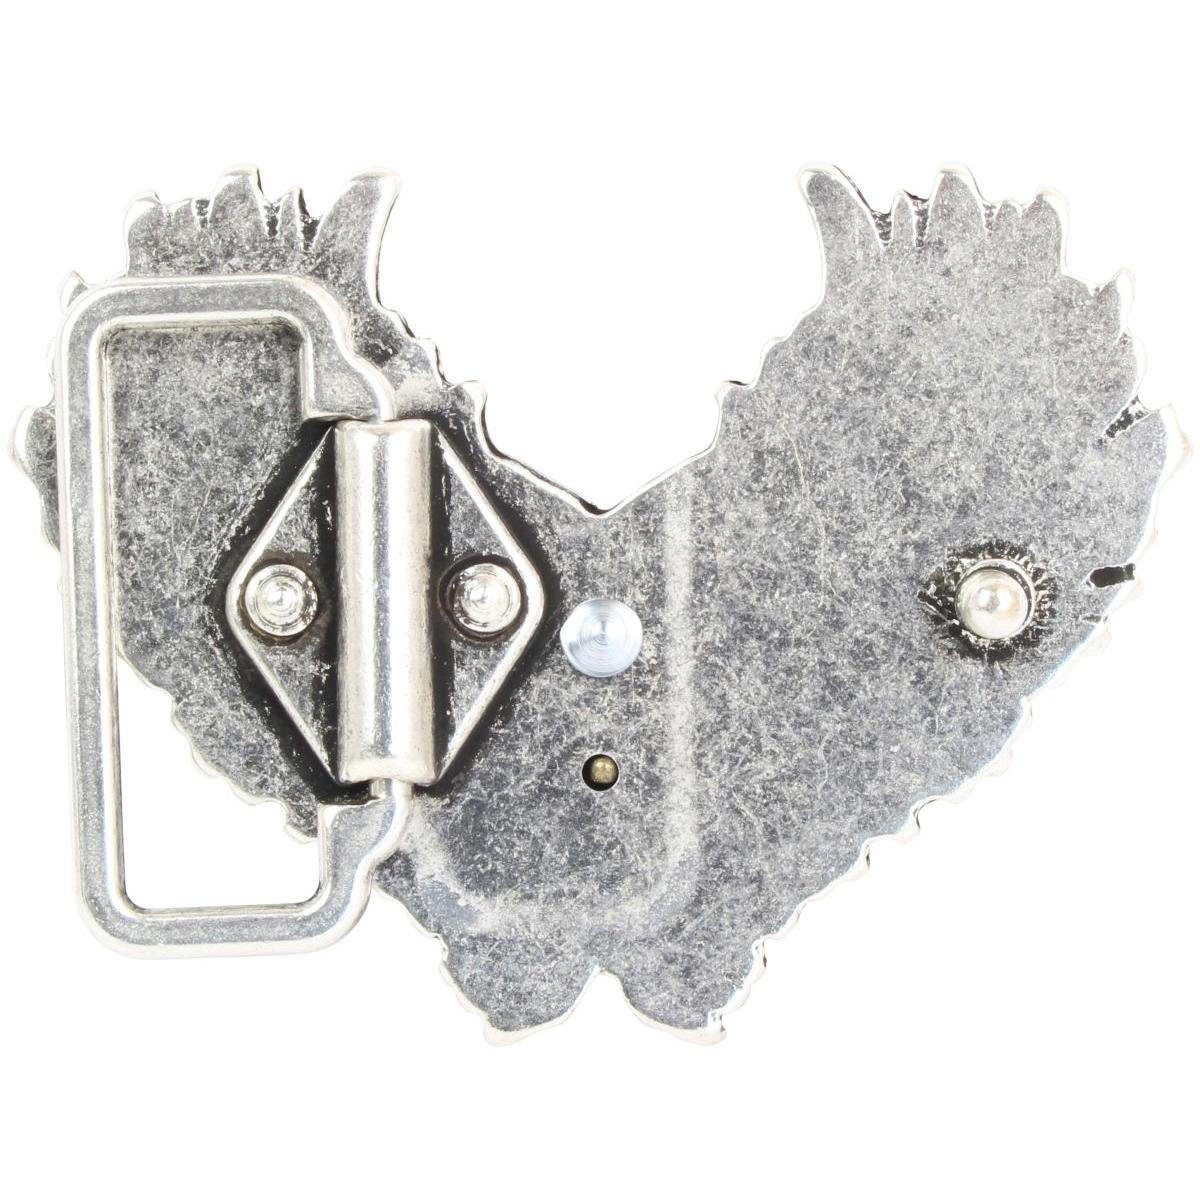 Gürtelschnalle - Gür Buckle cm 4,0 Gürtelschließe Flying - Wechselschließe BELTINGER 40mm Heart